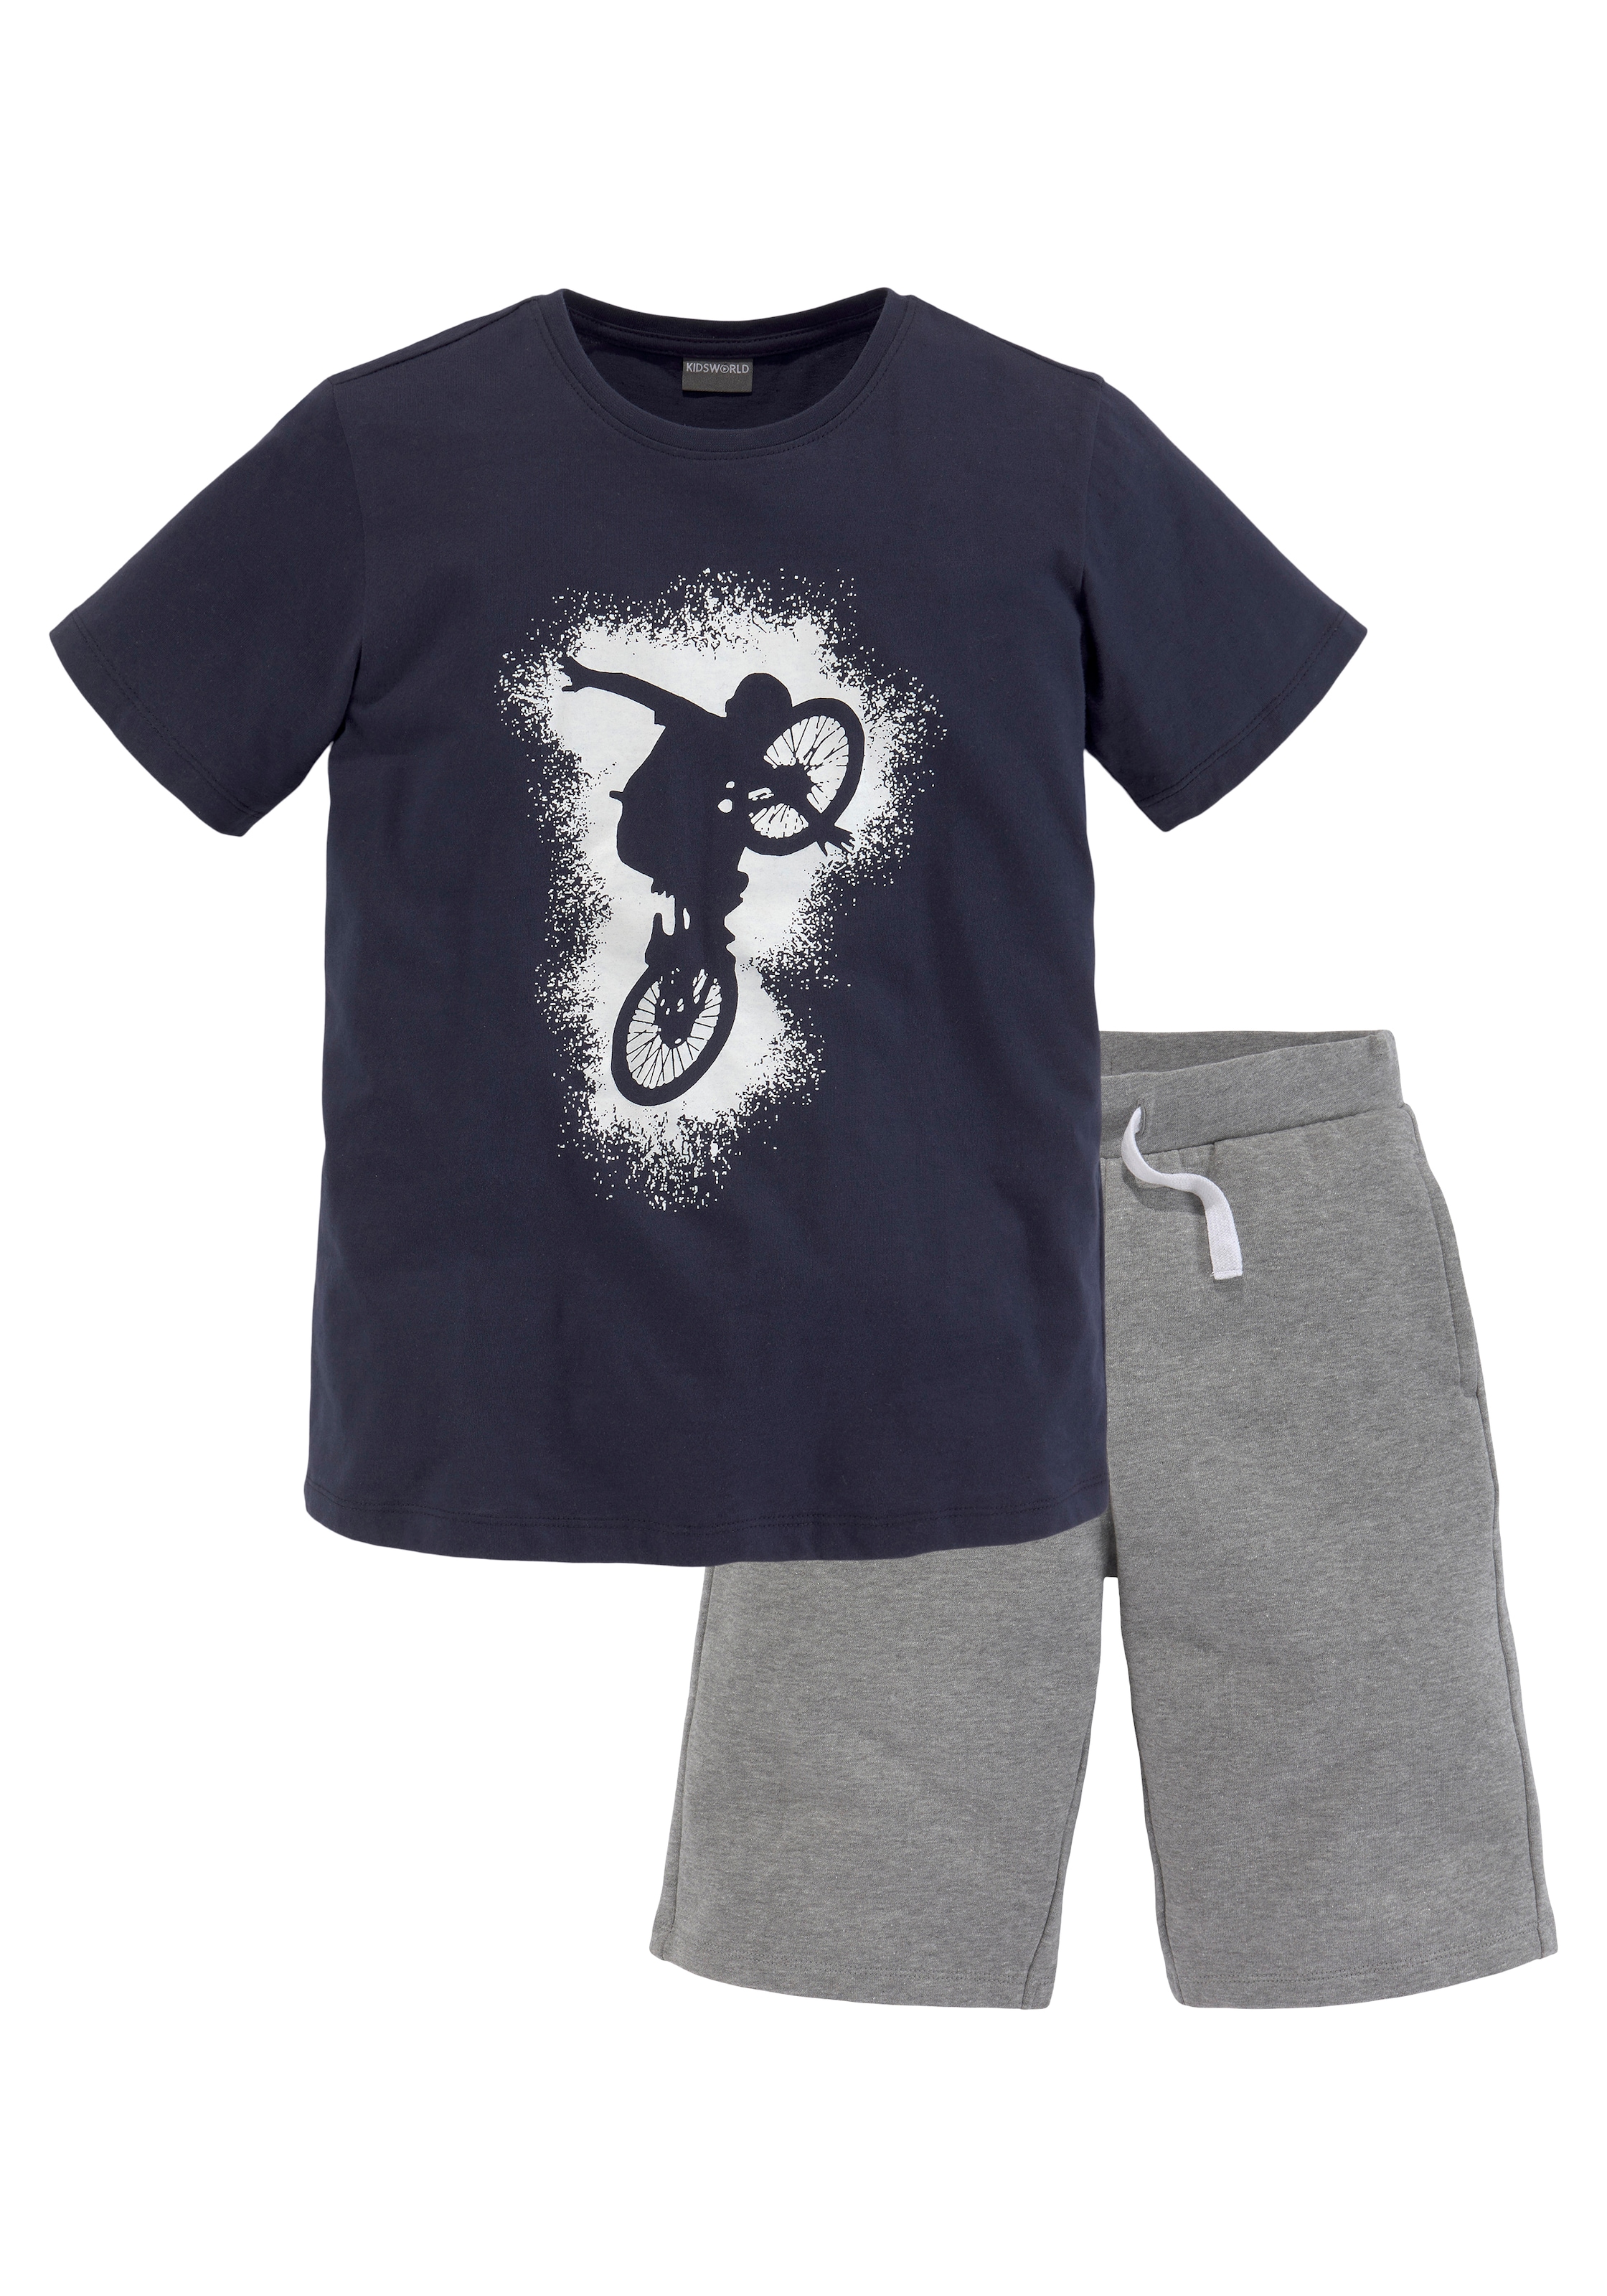 KIDSWORLD T-Shirt & Sweatbermudas, (Set, 2 tlg.), BIKER acheter